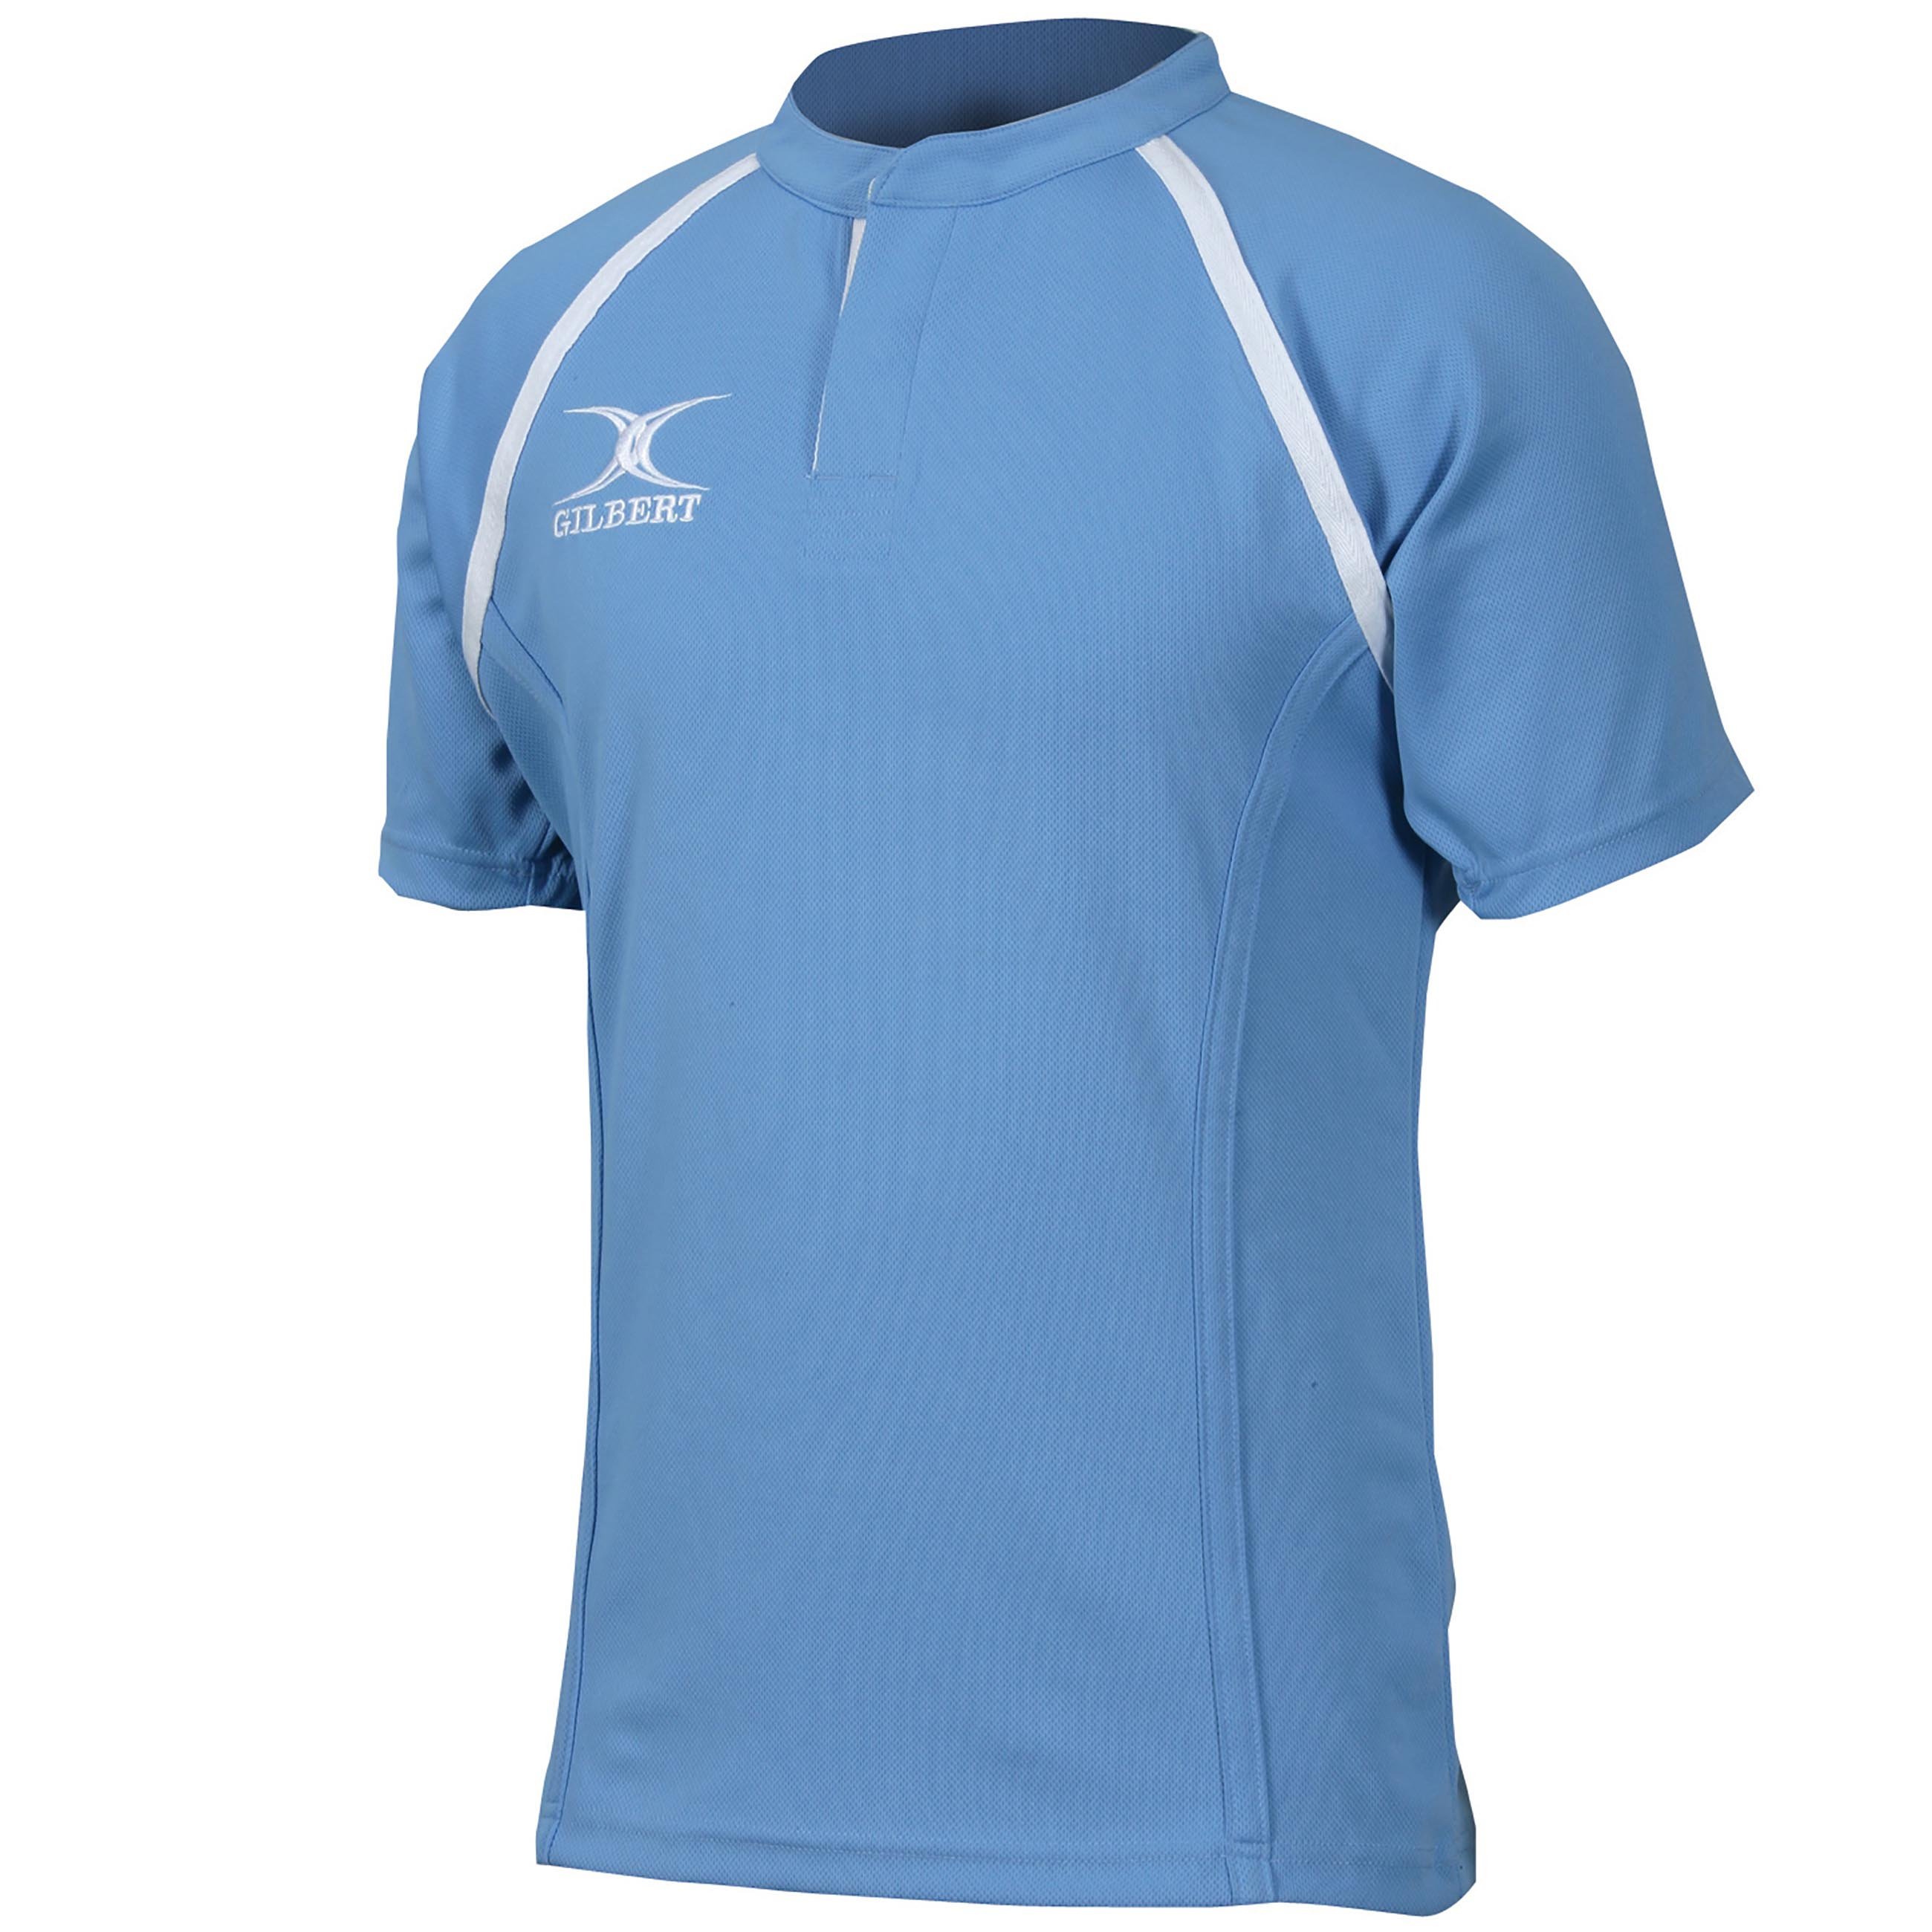 ICTP09359A - Gilbert Xact Plain Rugby Shirt - Sky Blue - 11-12 Years ...